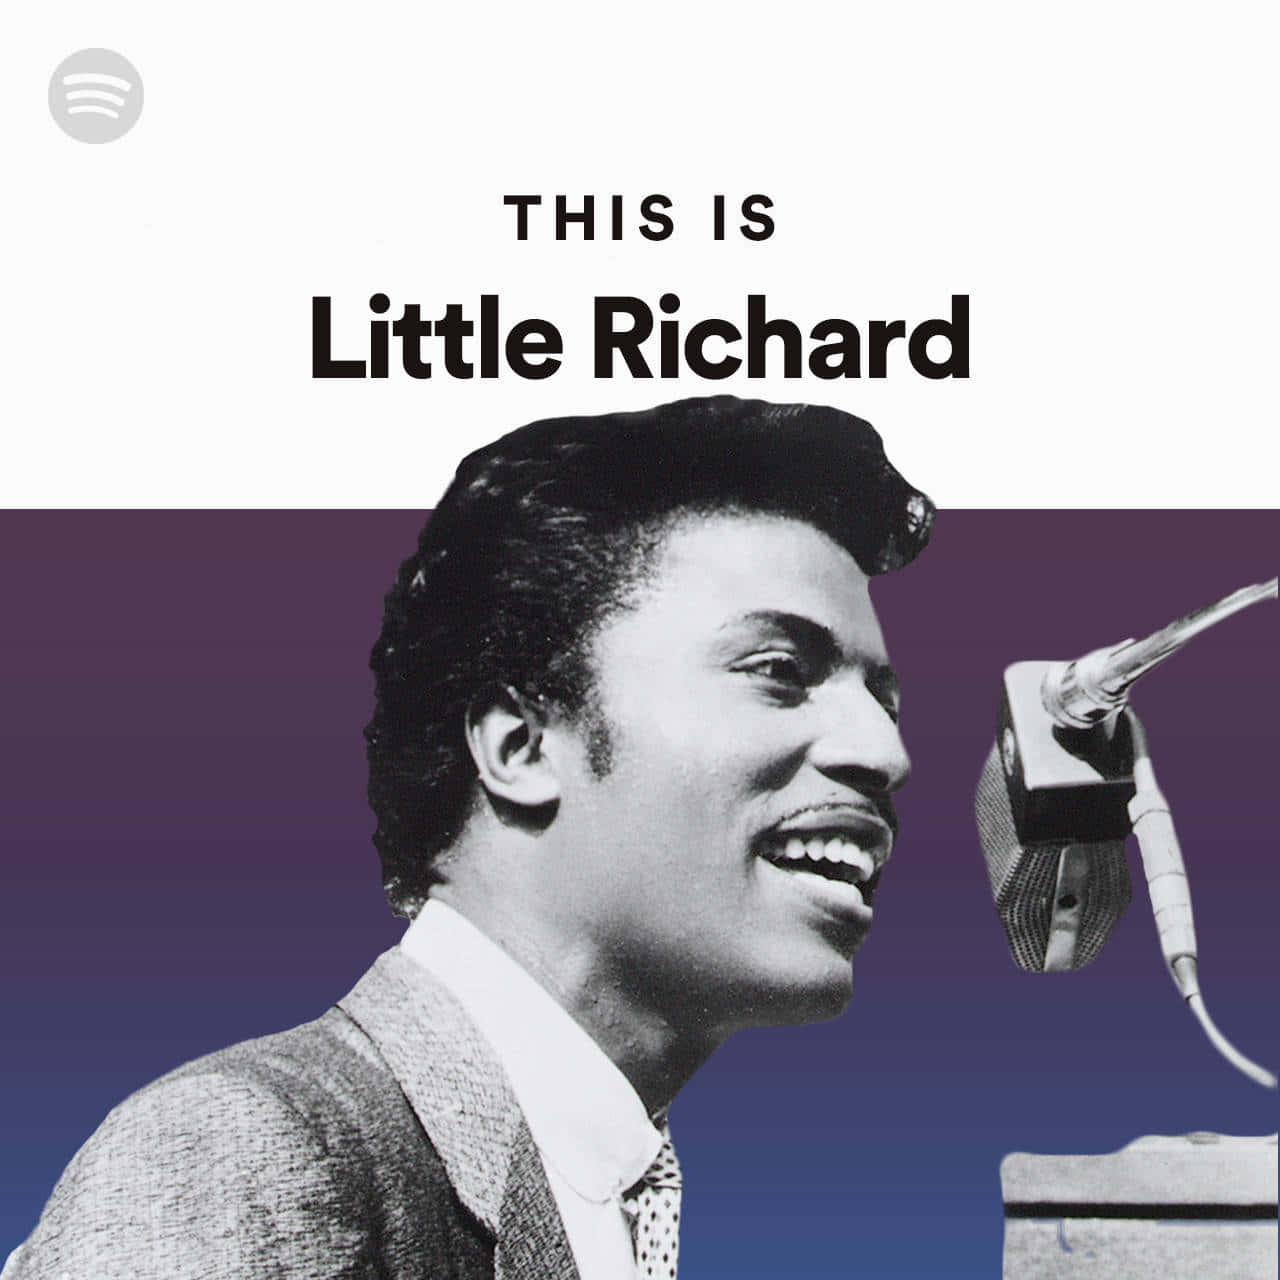 American Singer Little Richard Spotify Playlist Cover Wallpaper